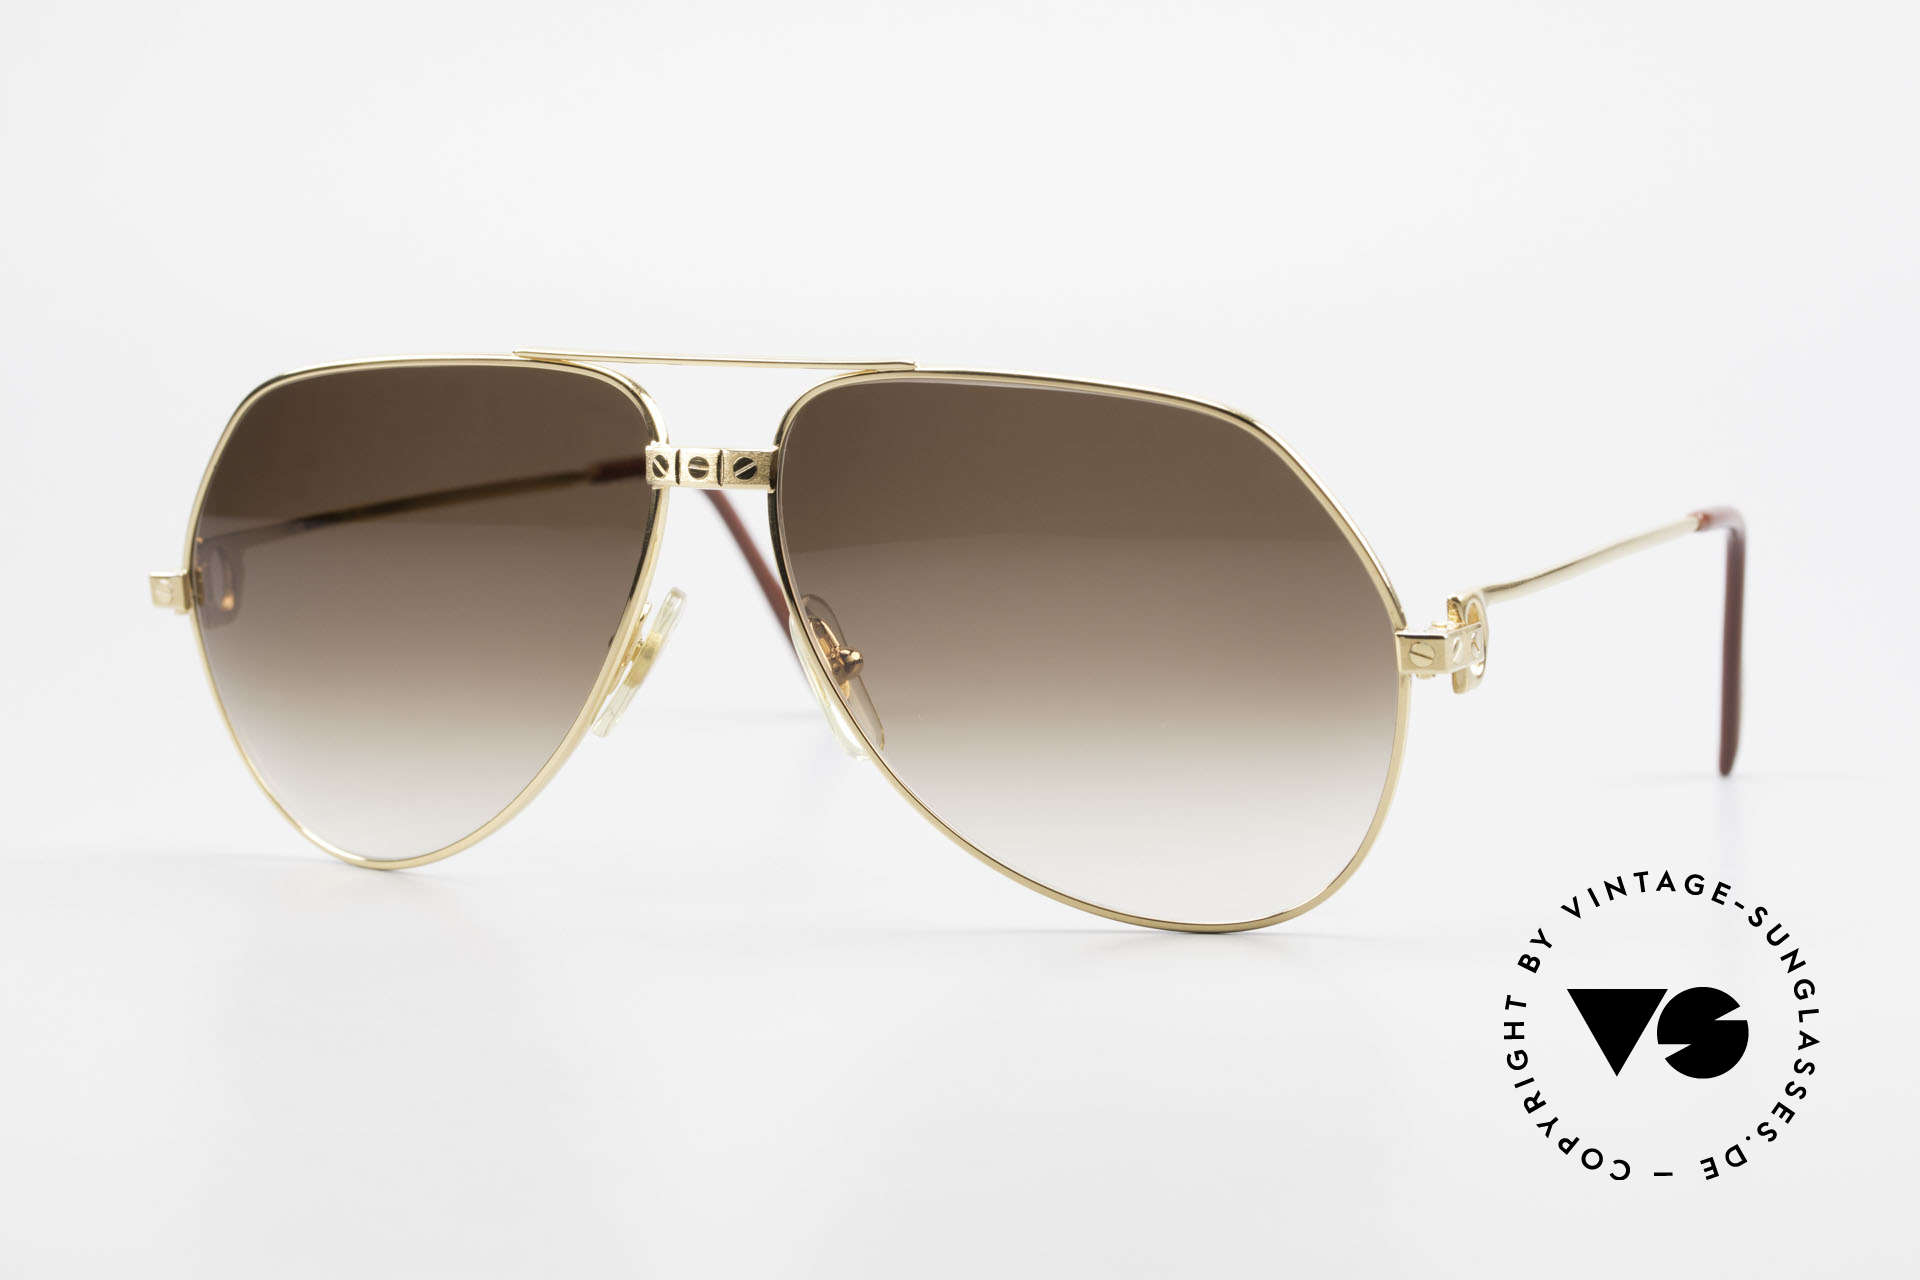 Cartier Vendome Santos - L Special Edition Fully Gold, unique Cartier Vendome sunglasses, LARGE size 62°14, Made for Men